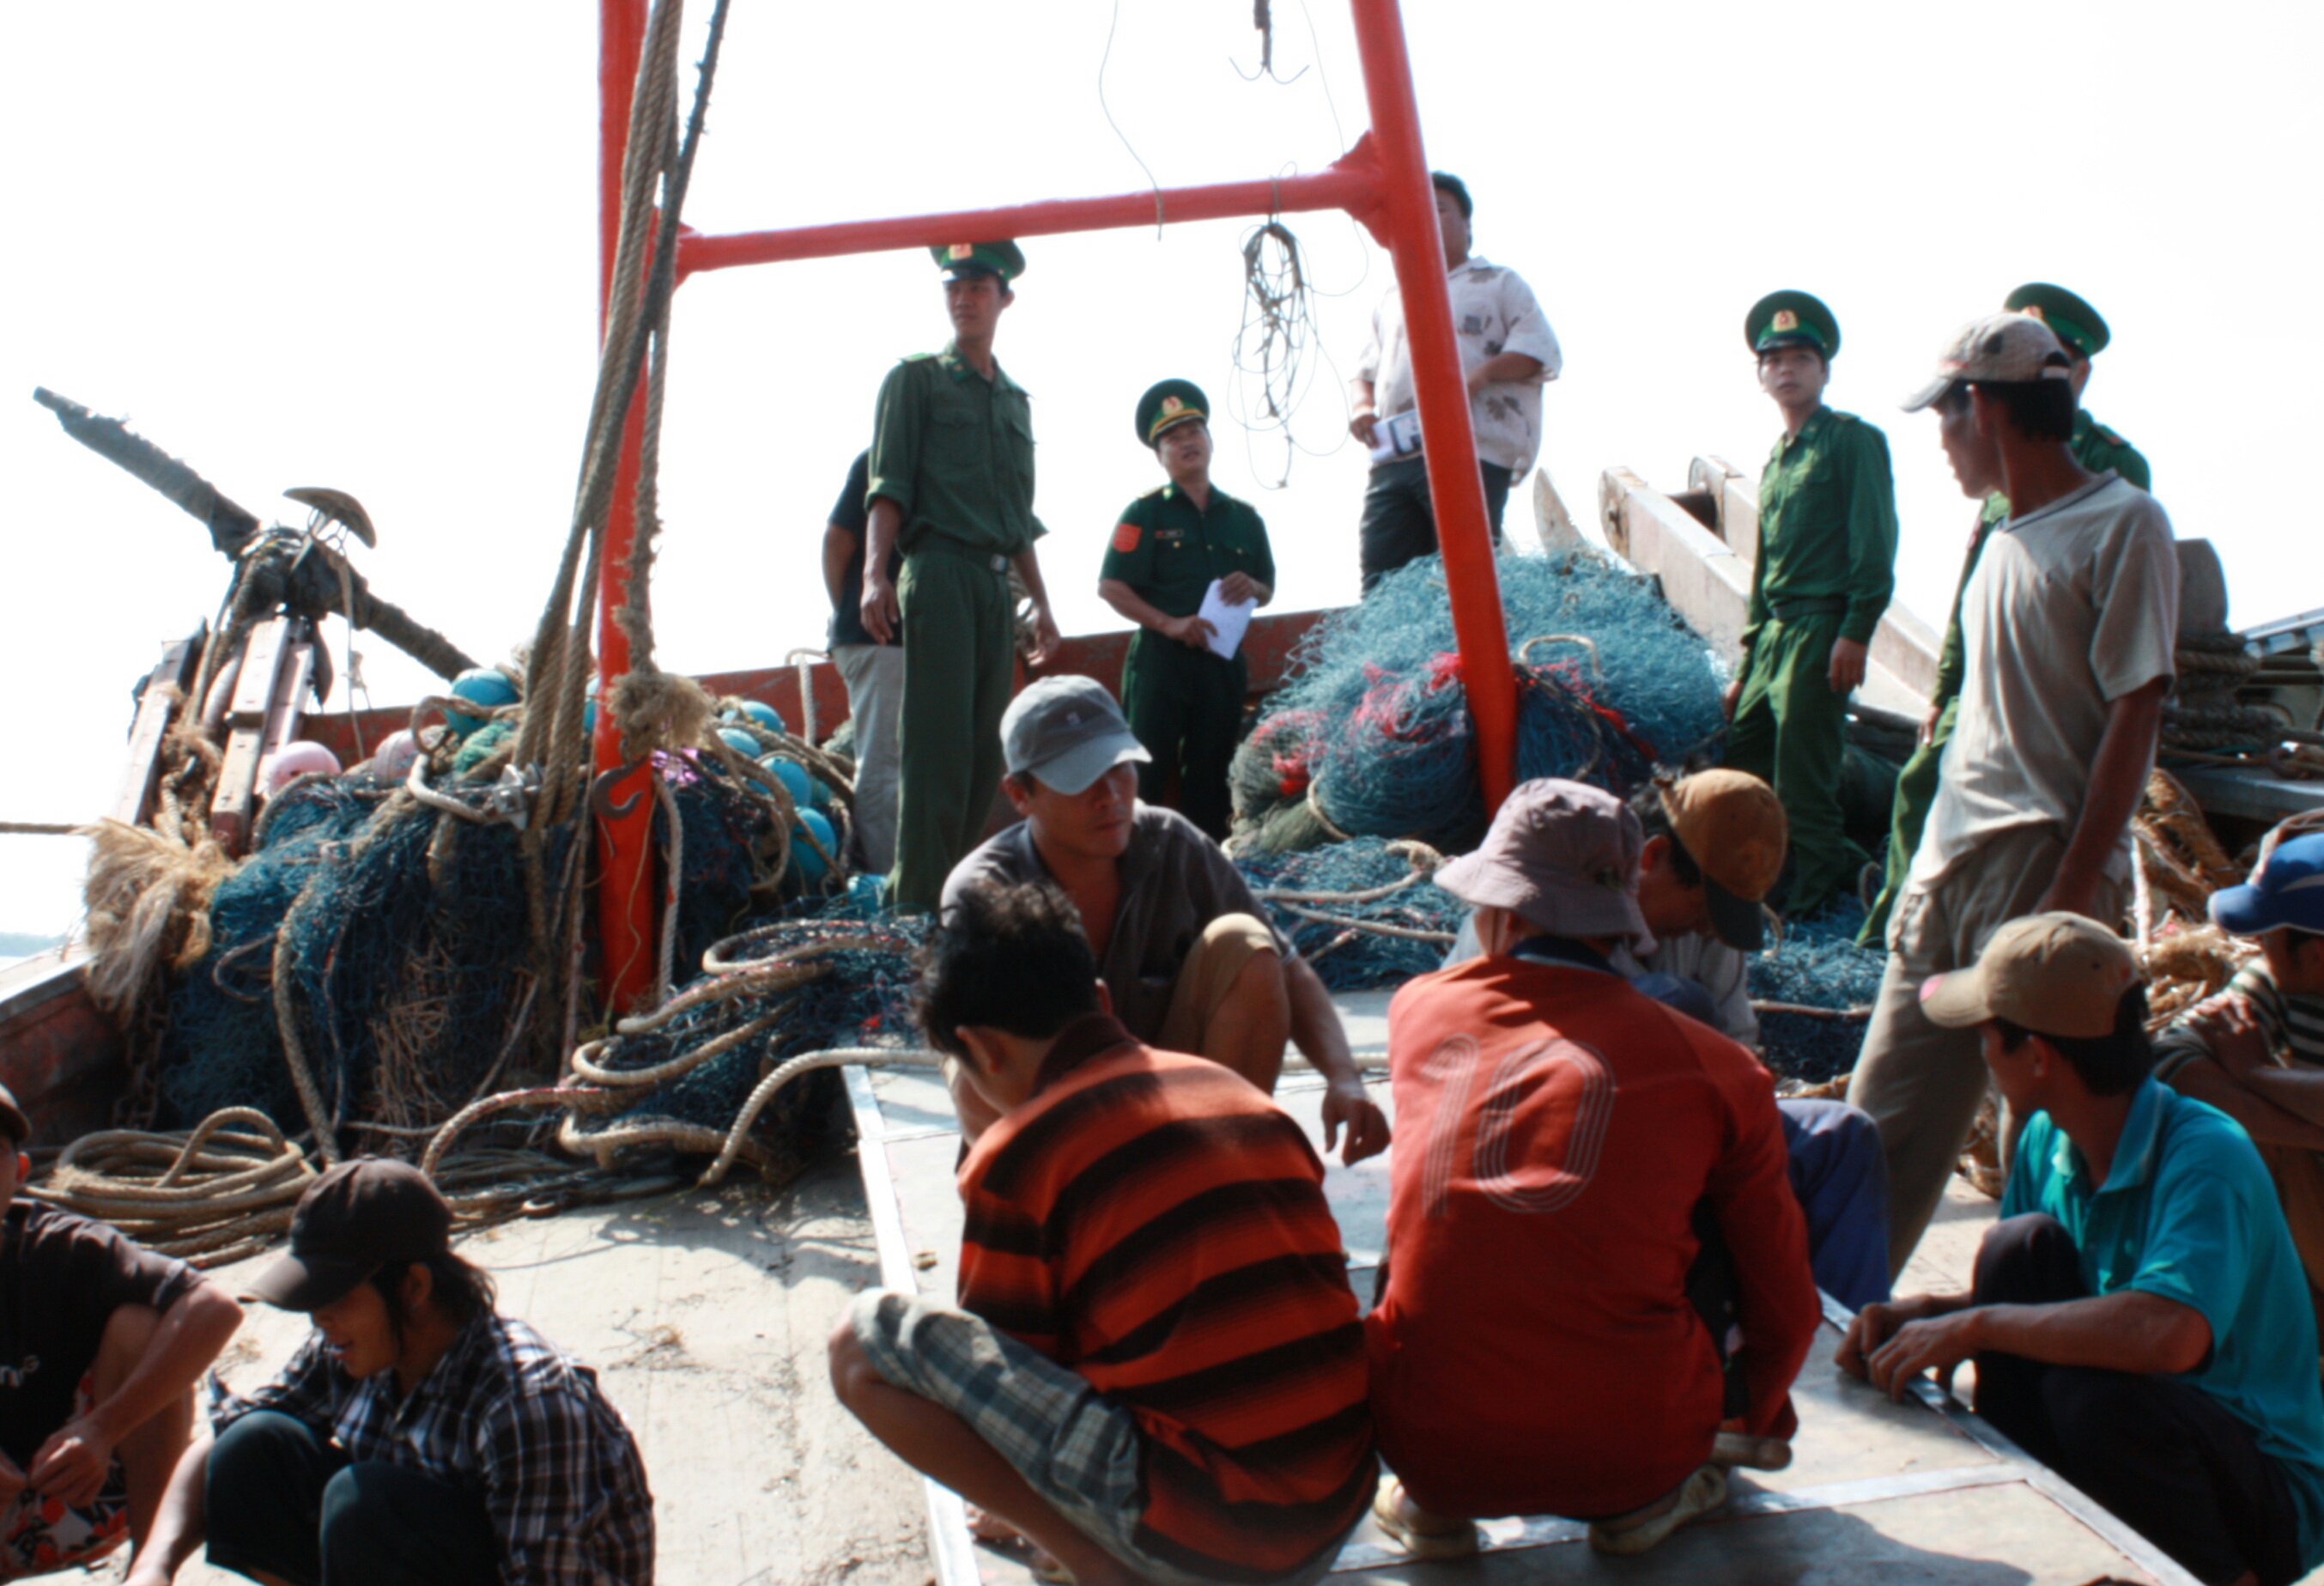 Shooting at Vietnamese fishermen act of violating international law: experts